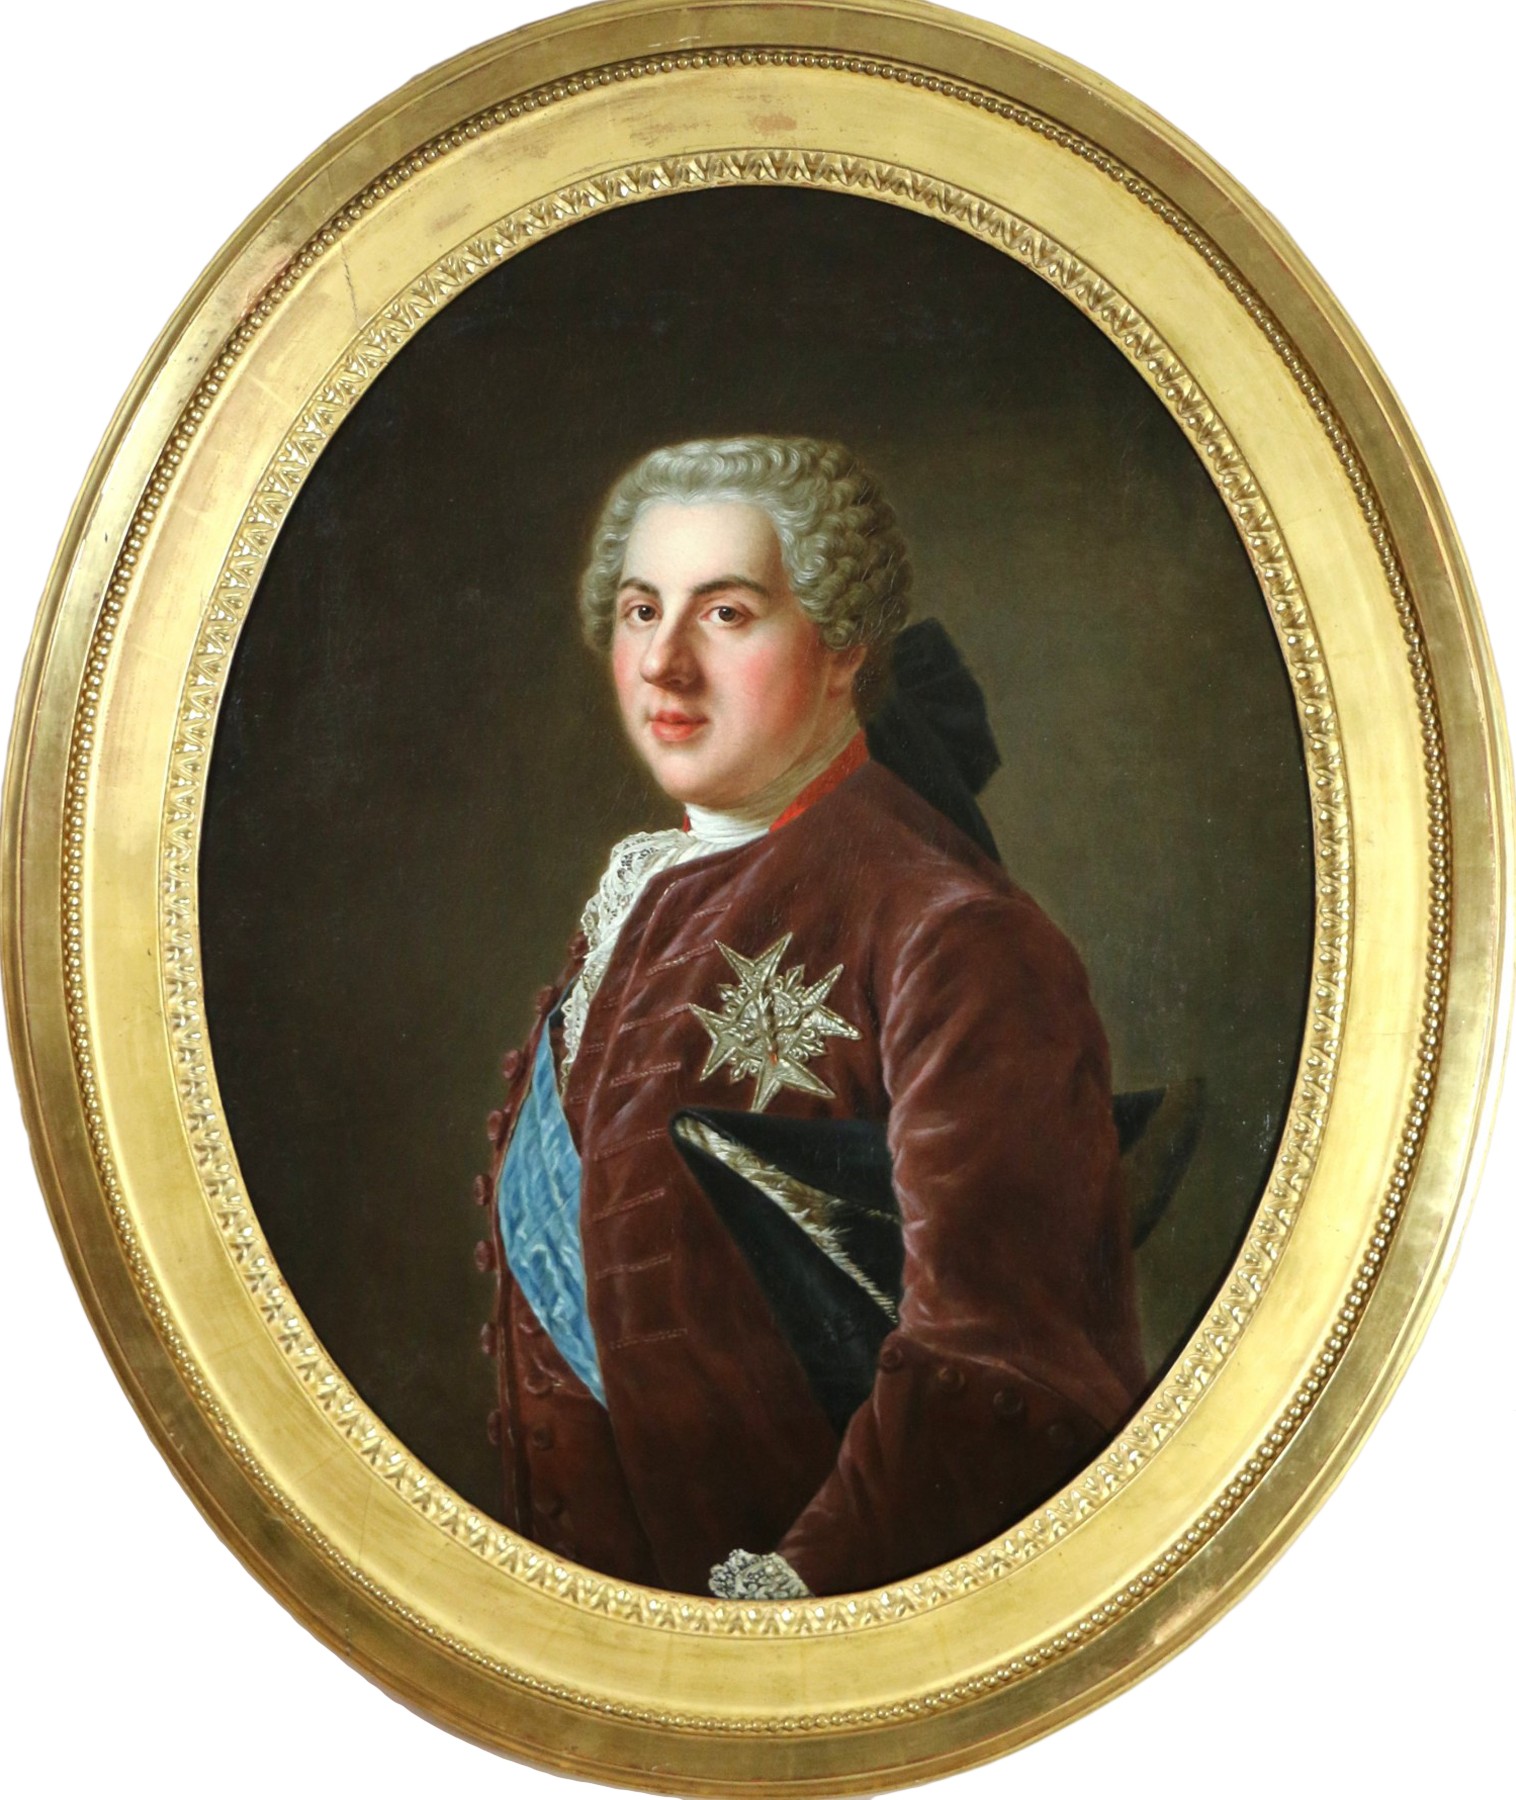 ouis Ferdinand de France (1729 - 1765), Dauphin of France, son of